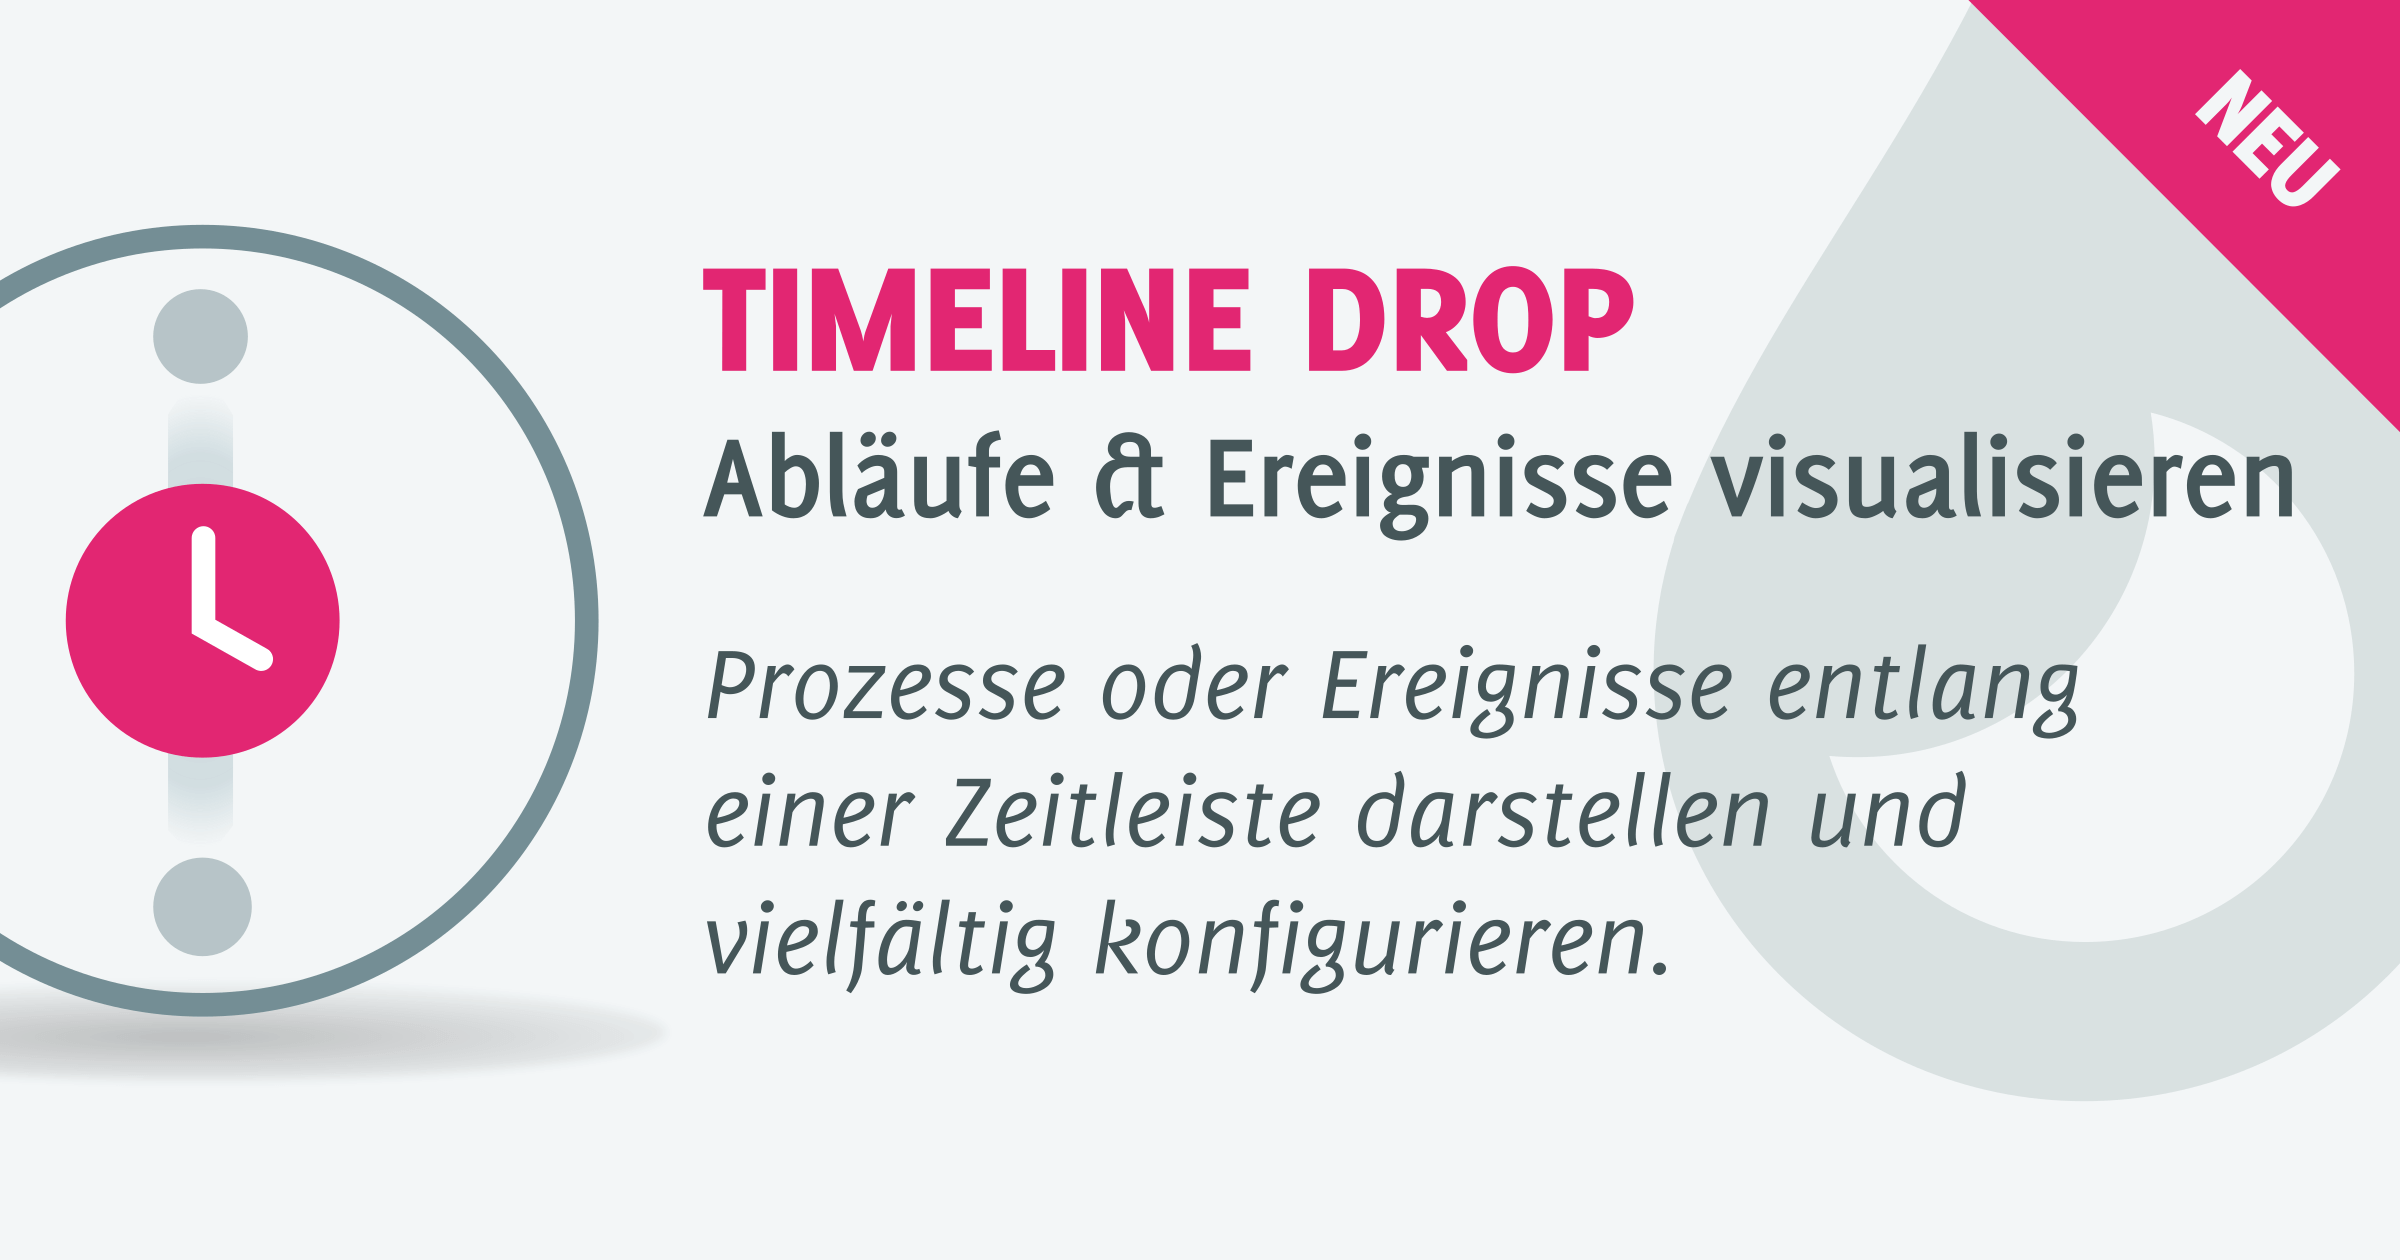 Drop Release: Timeline